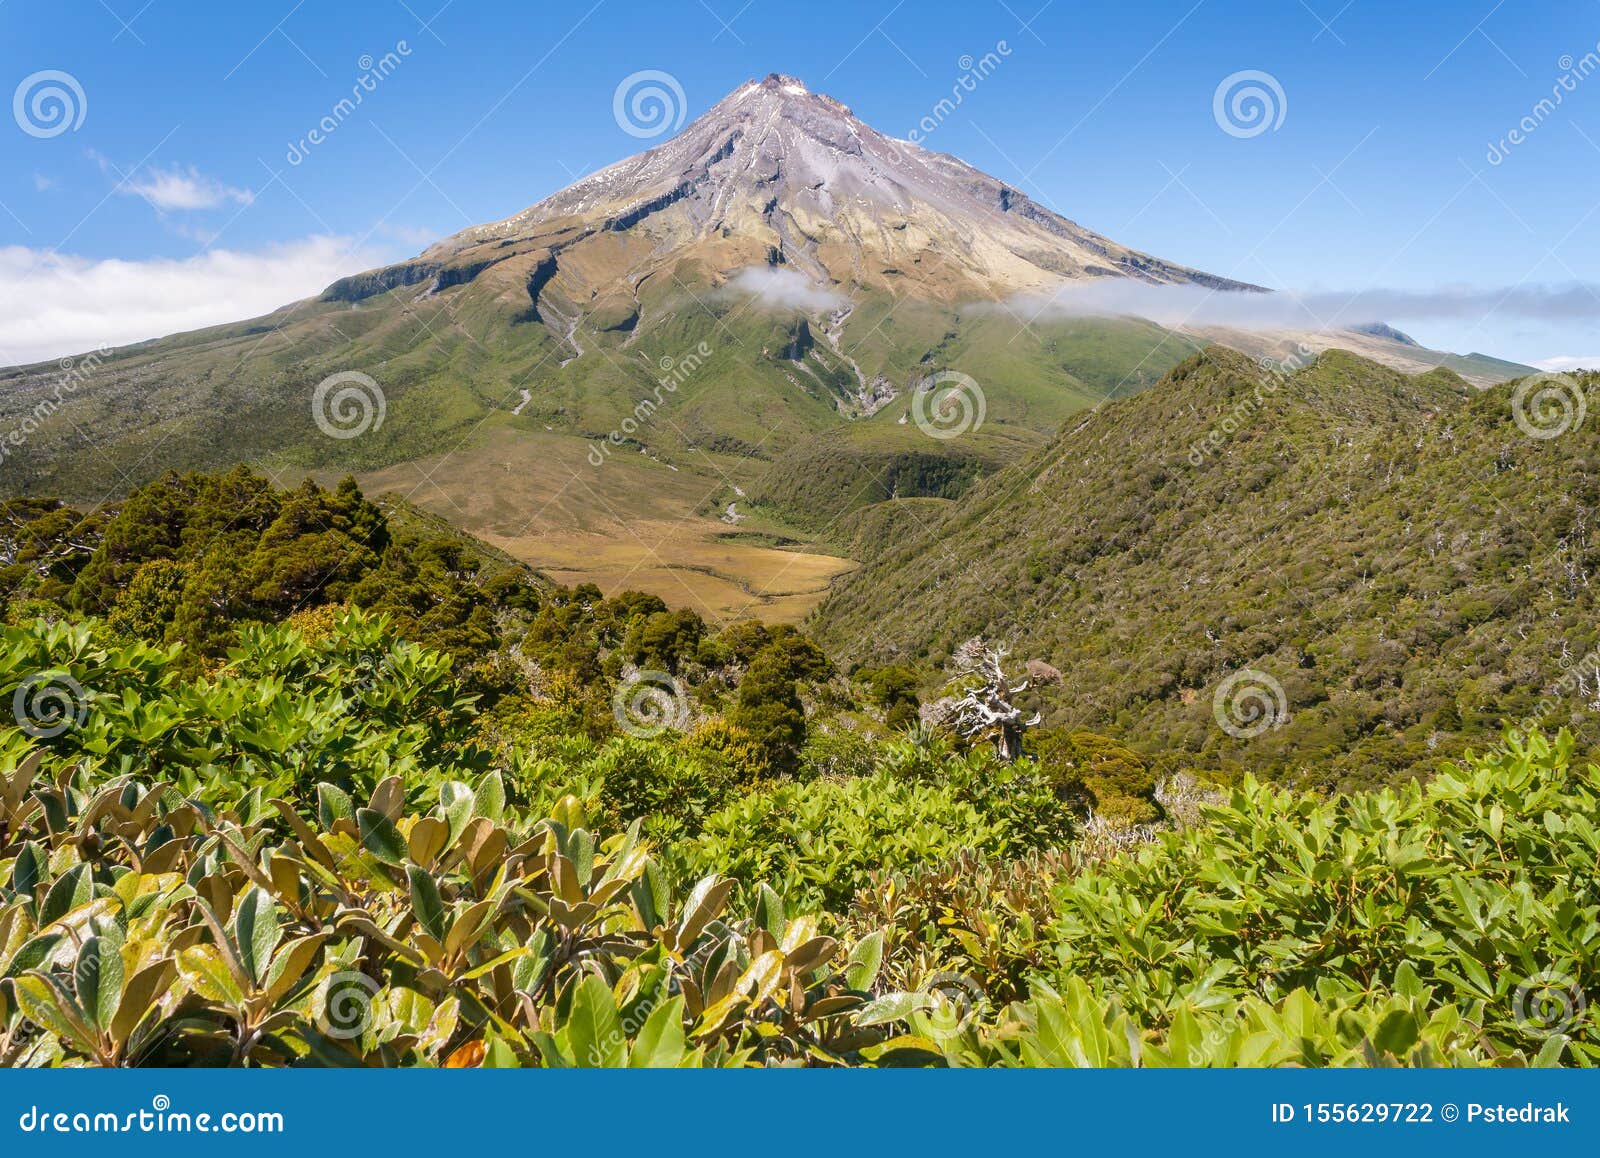 egmont national park with dormant stratovolcano mount taranaki in distance